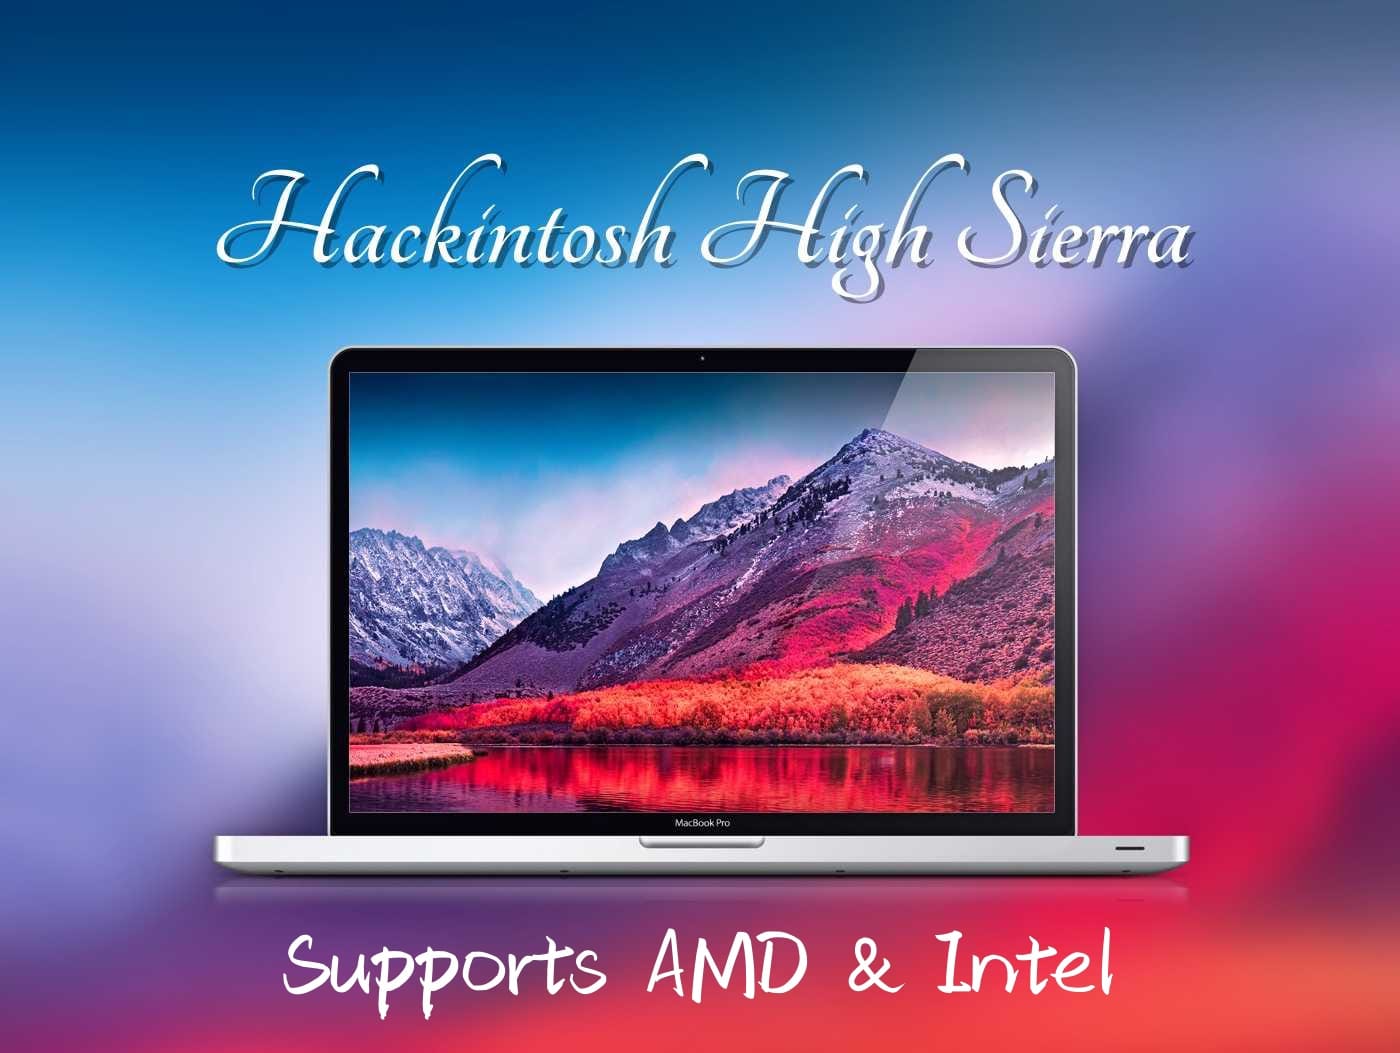 Mac Os High Sierra Rdr Download